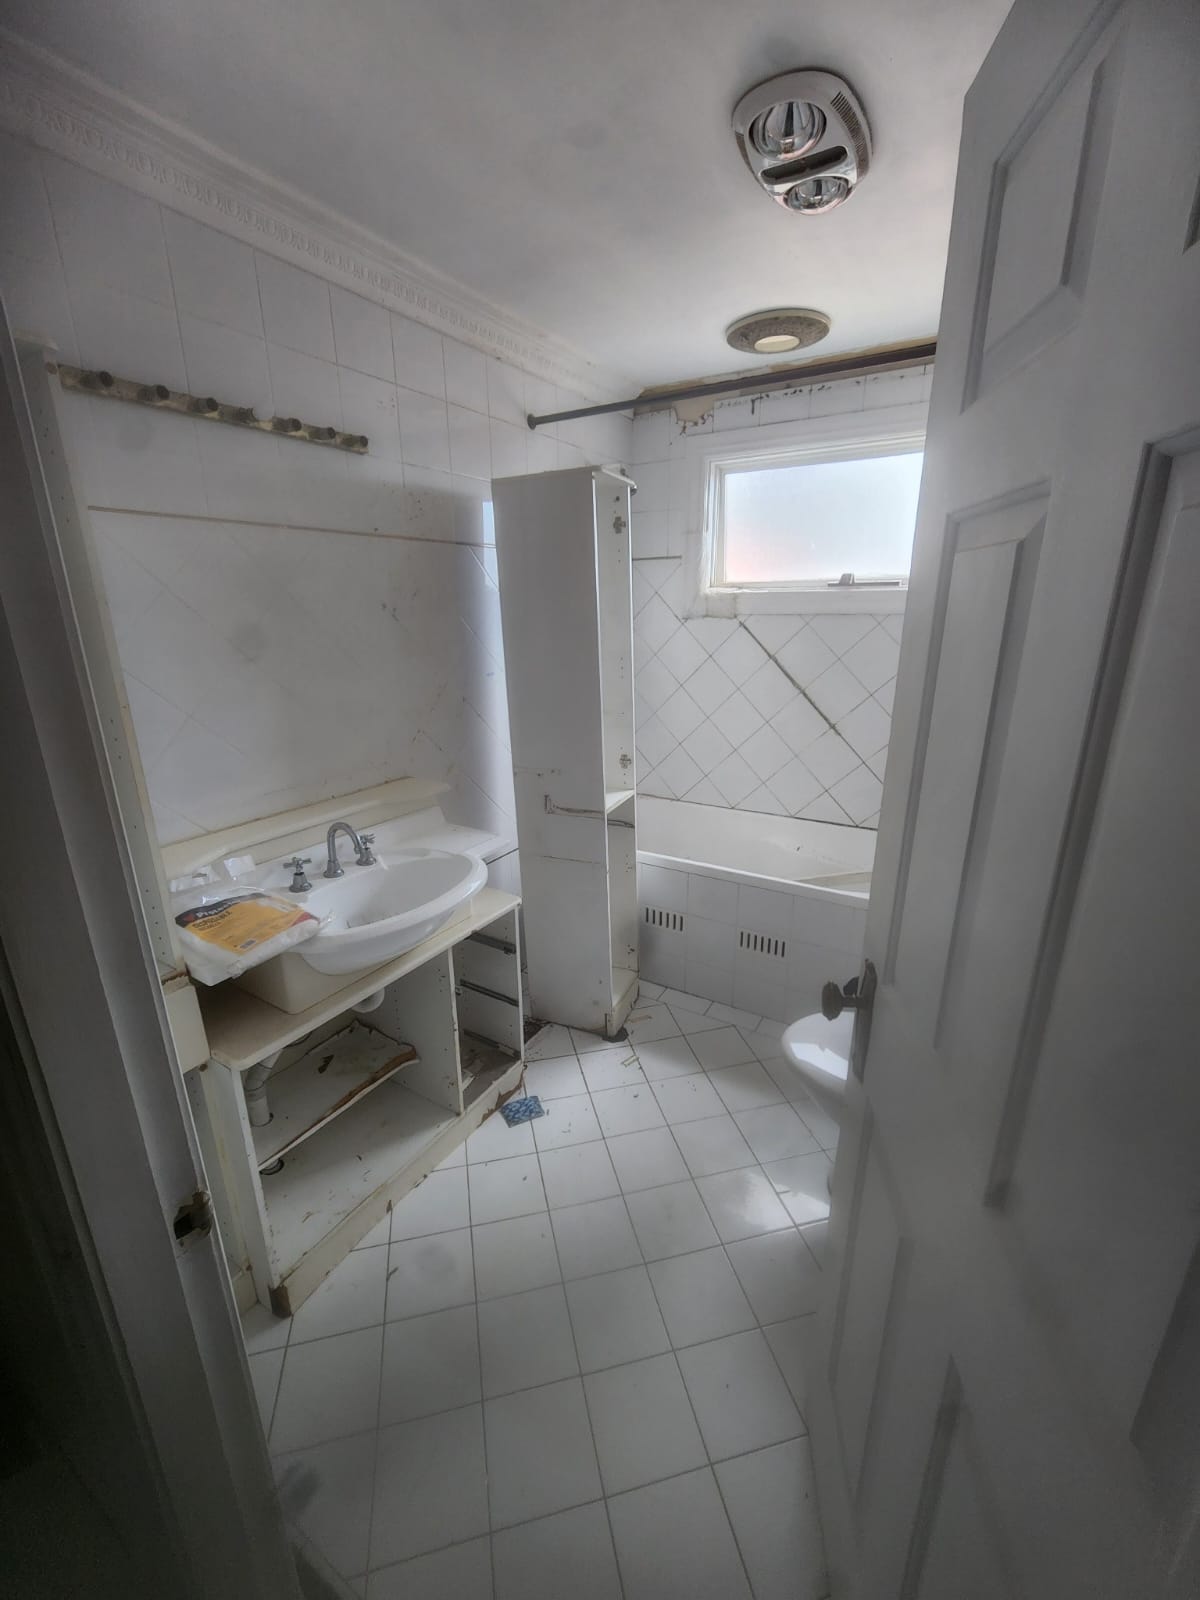 Bronte Bathroom Renovation (Before Photo)